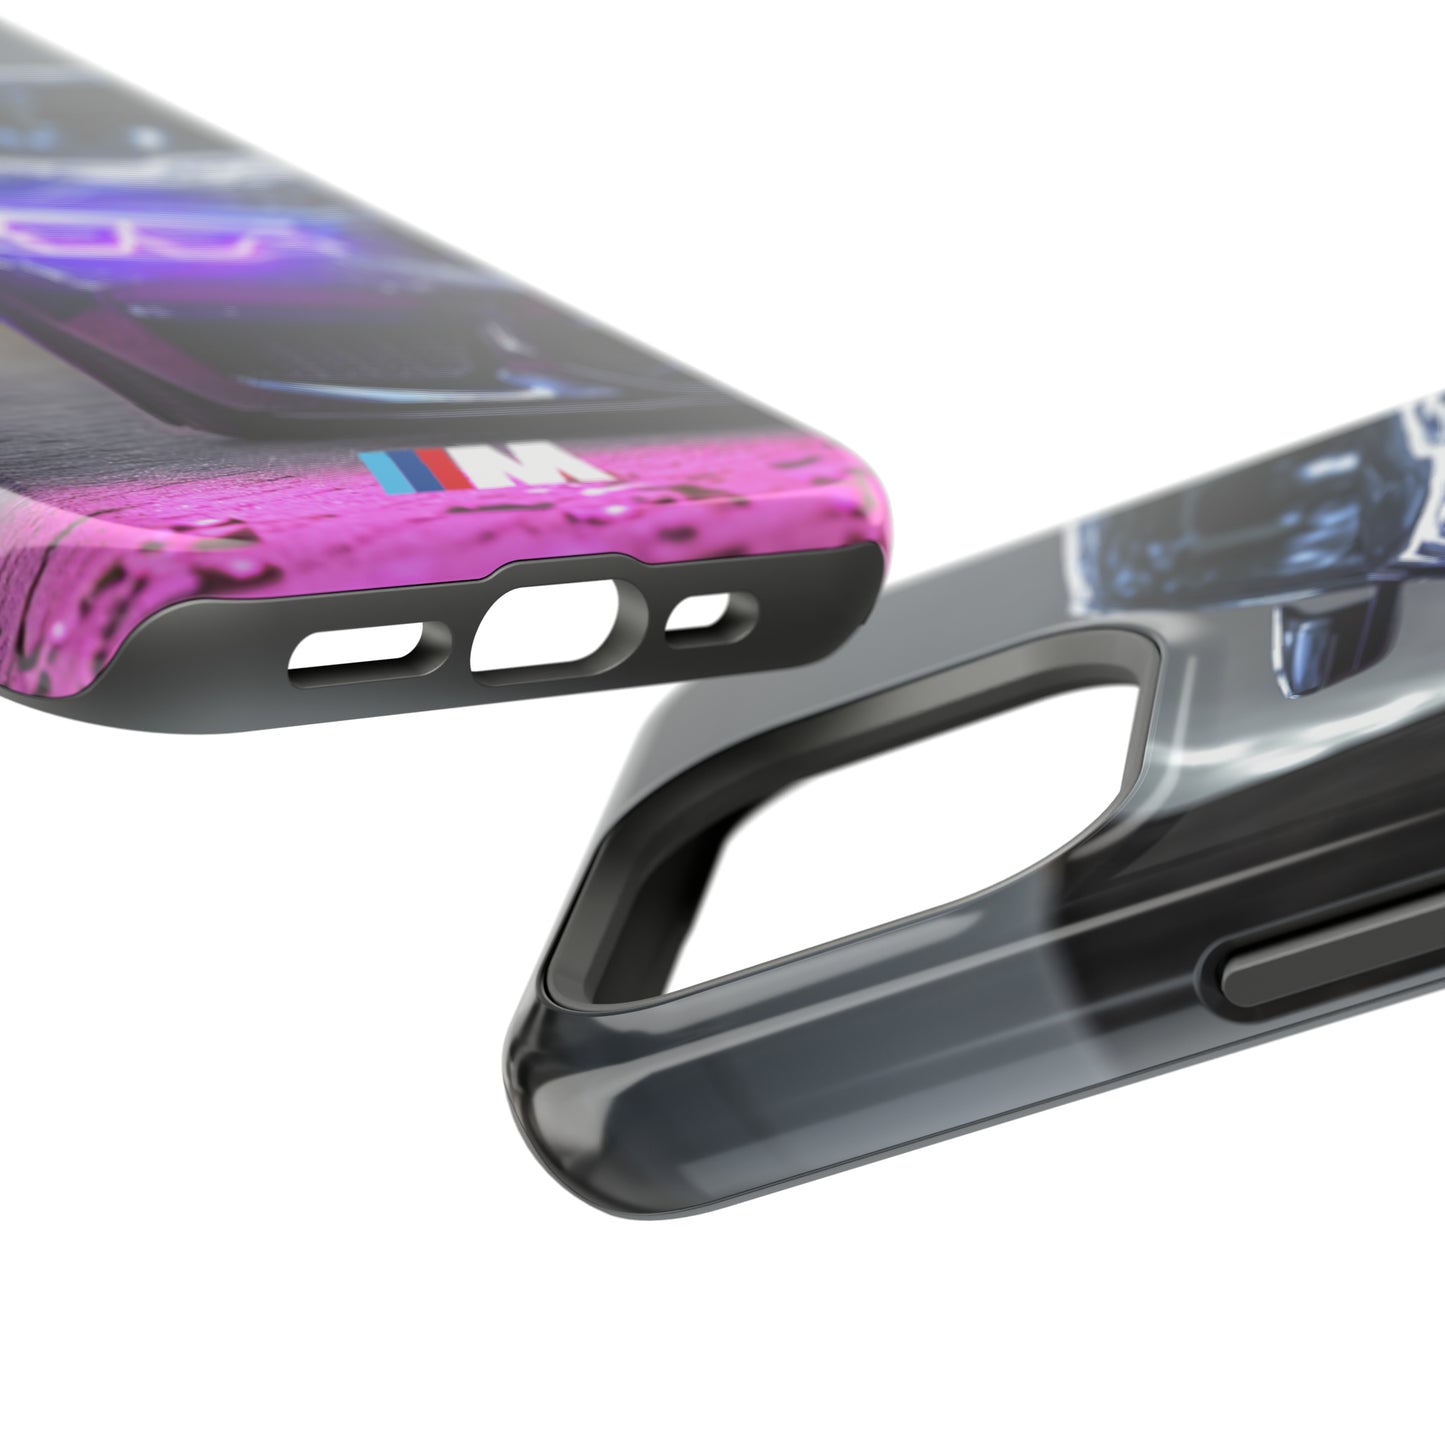 BMW F80 M3 Purple Laserlight Magsafe Tough iPhone Case